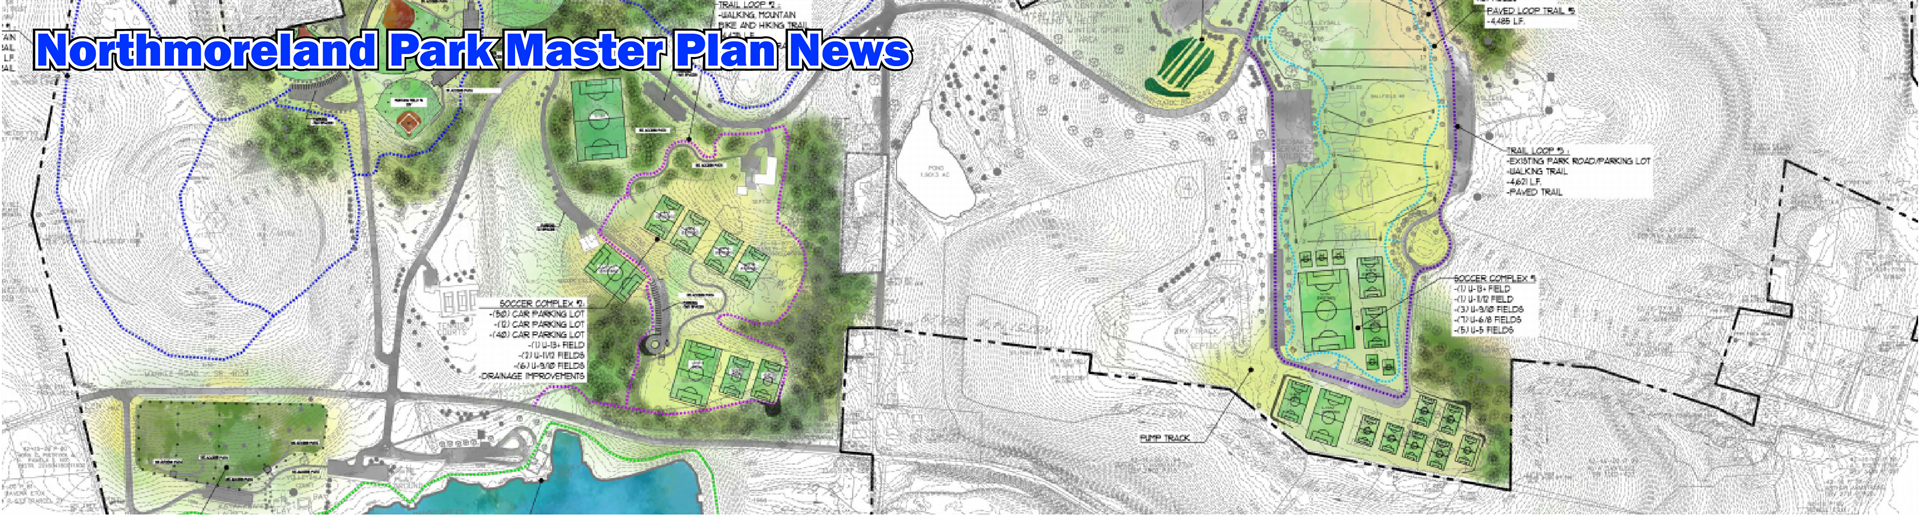 Park Master Plan-New Soccer Fields